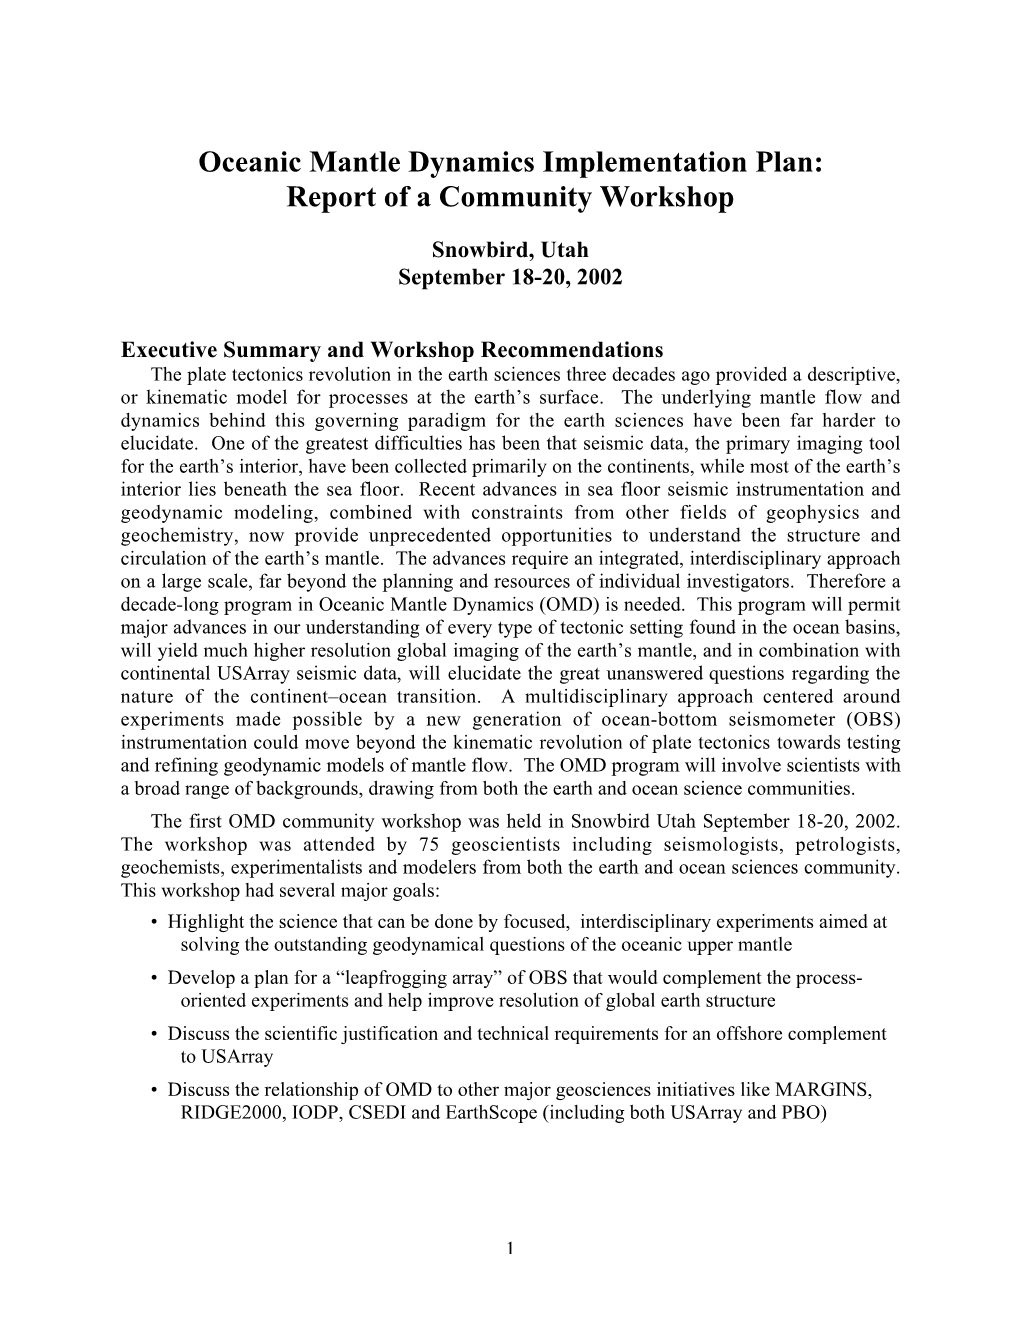 Oceanic Mantle Dynamics Implementation Plan: Report of a Community Workshop